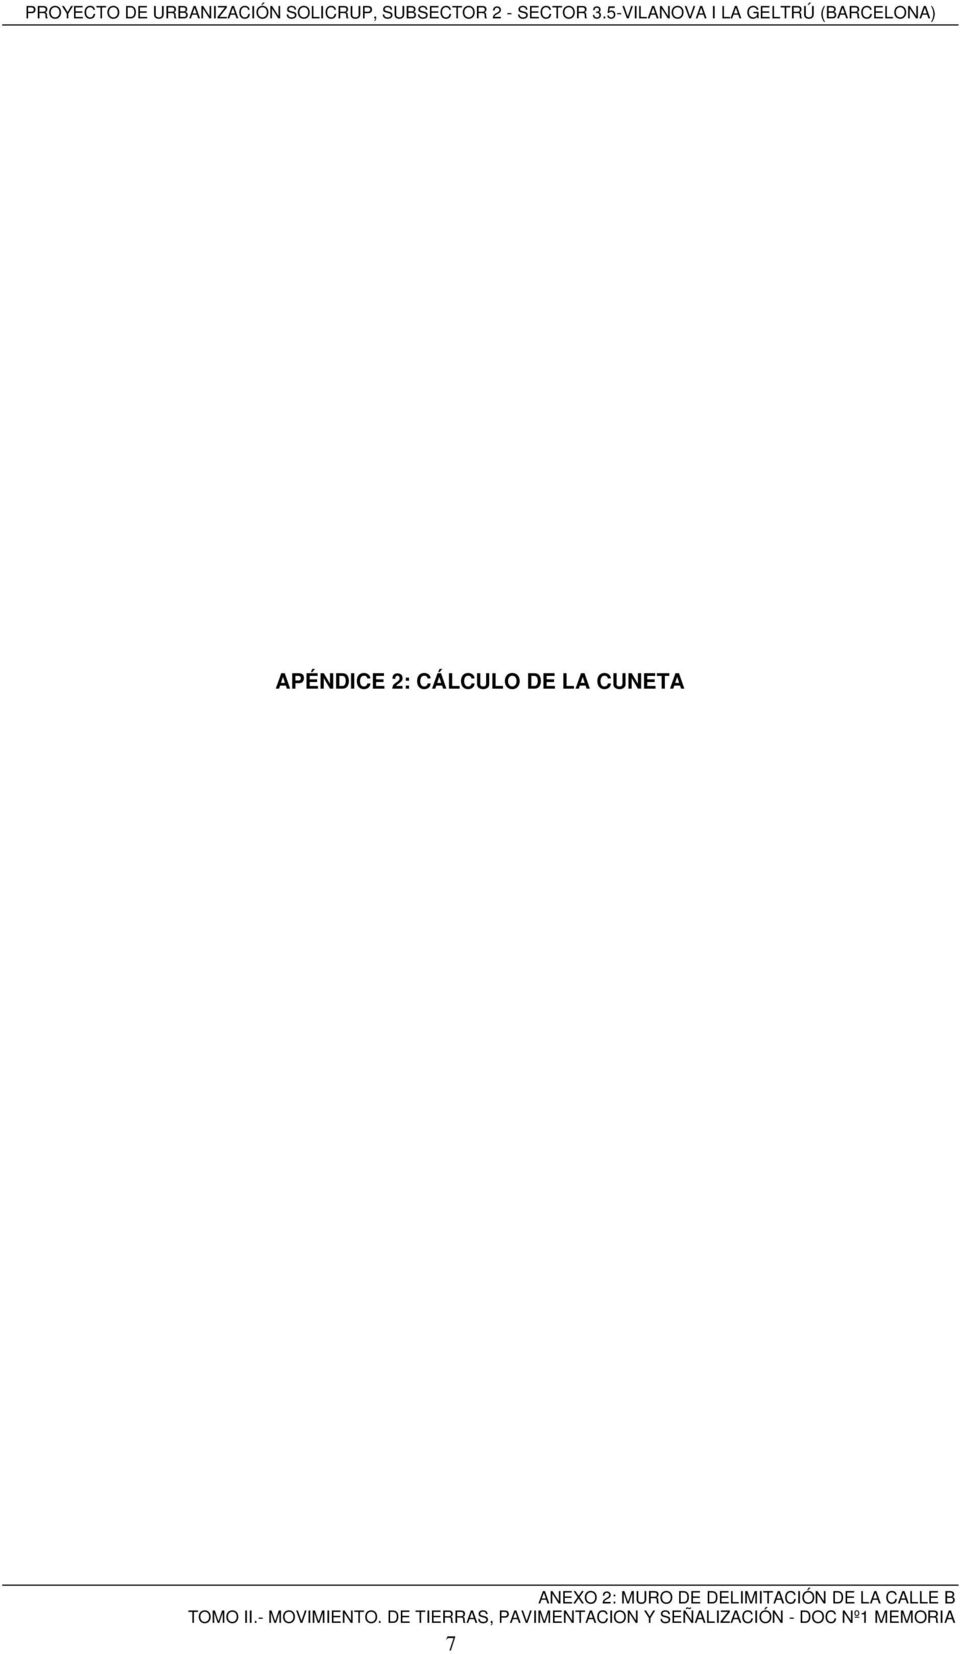 CUNETA ANEXO 2: MURO DE DELIMITACIÓN DE LA CALLE B TOMO II.